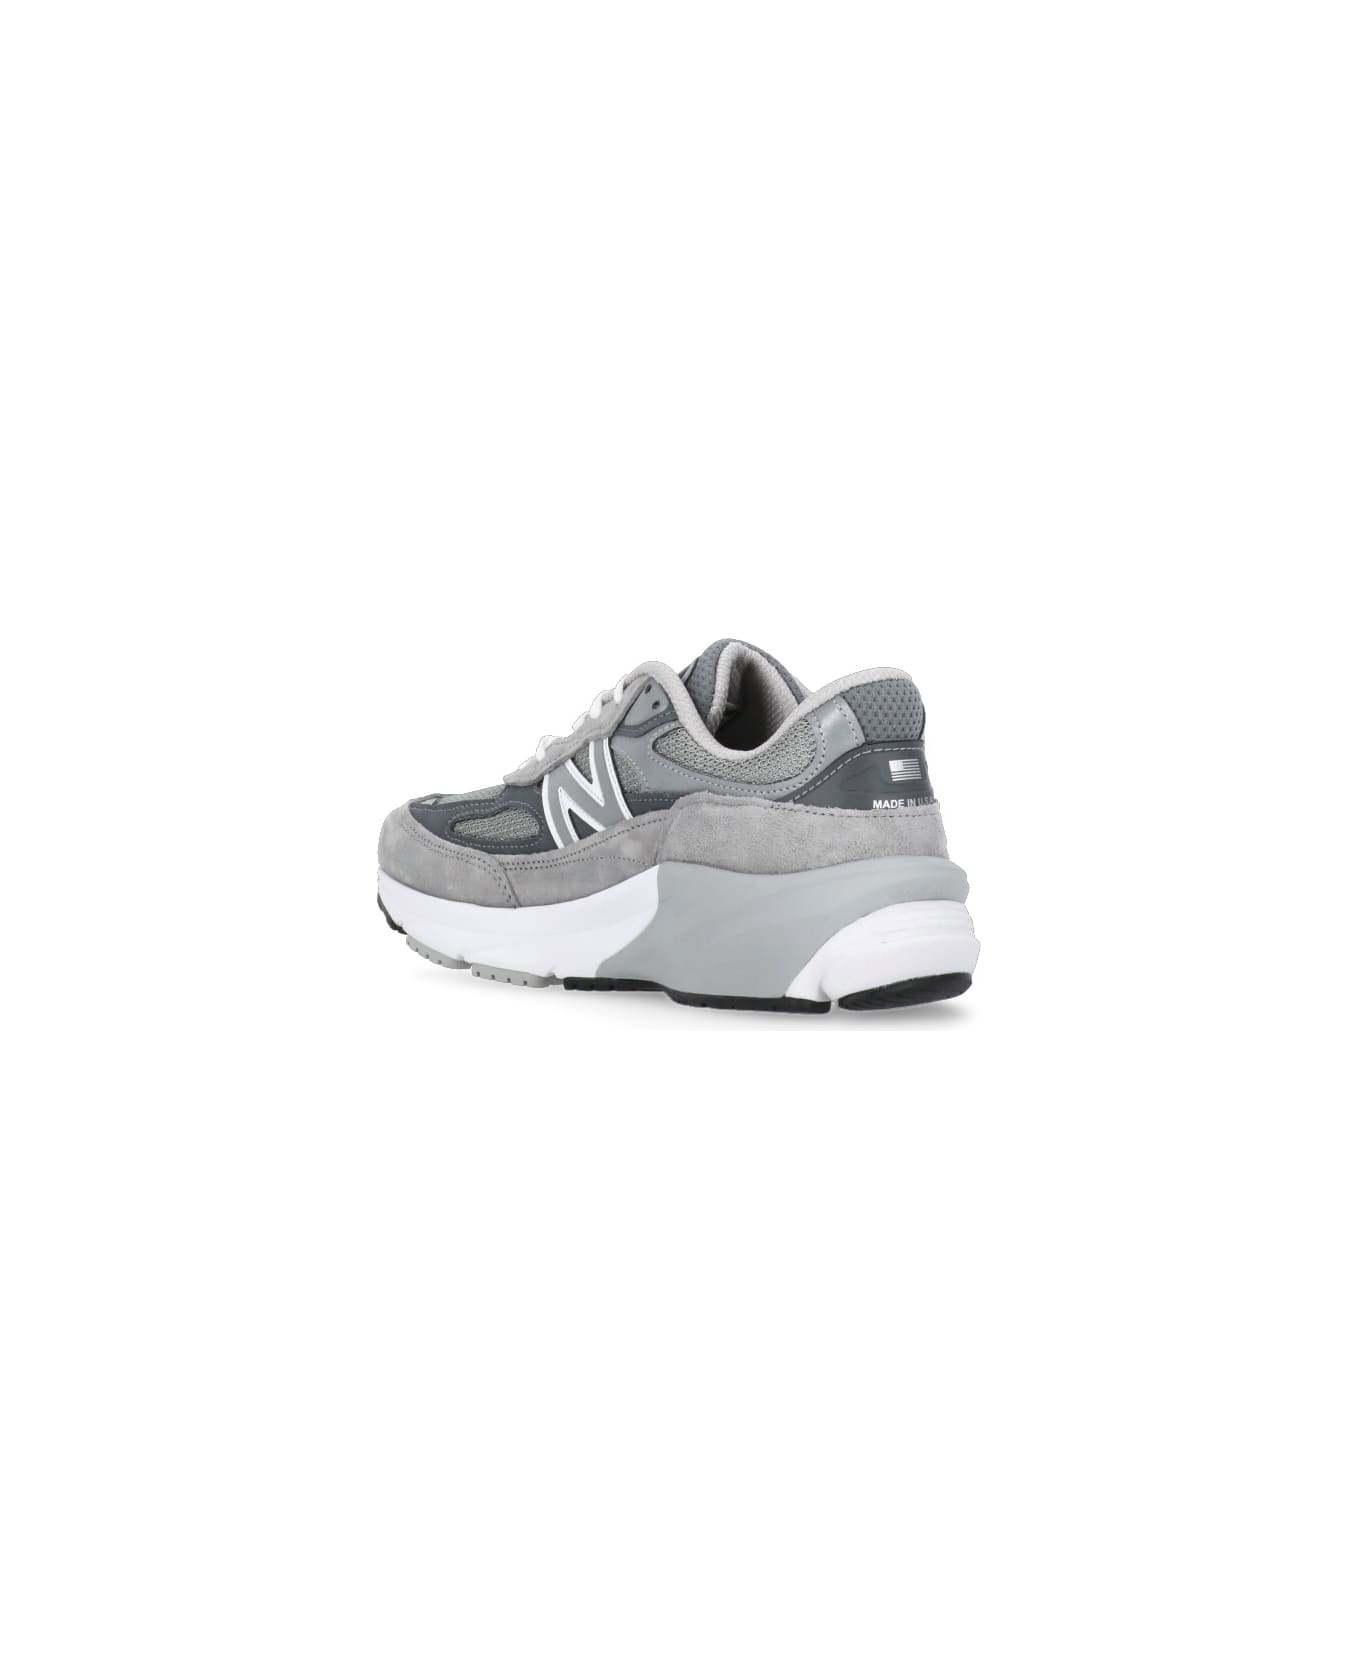 New Balance 990v6 Sneakers - Grey